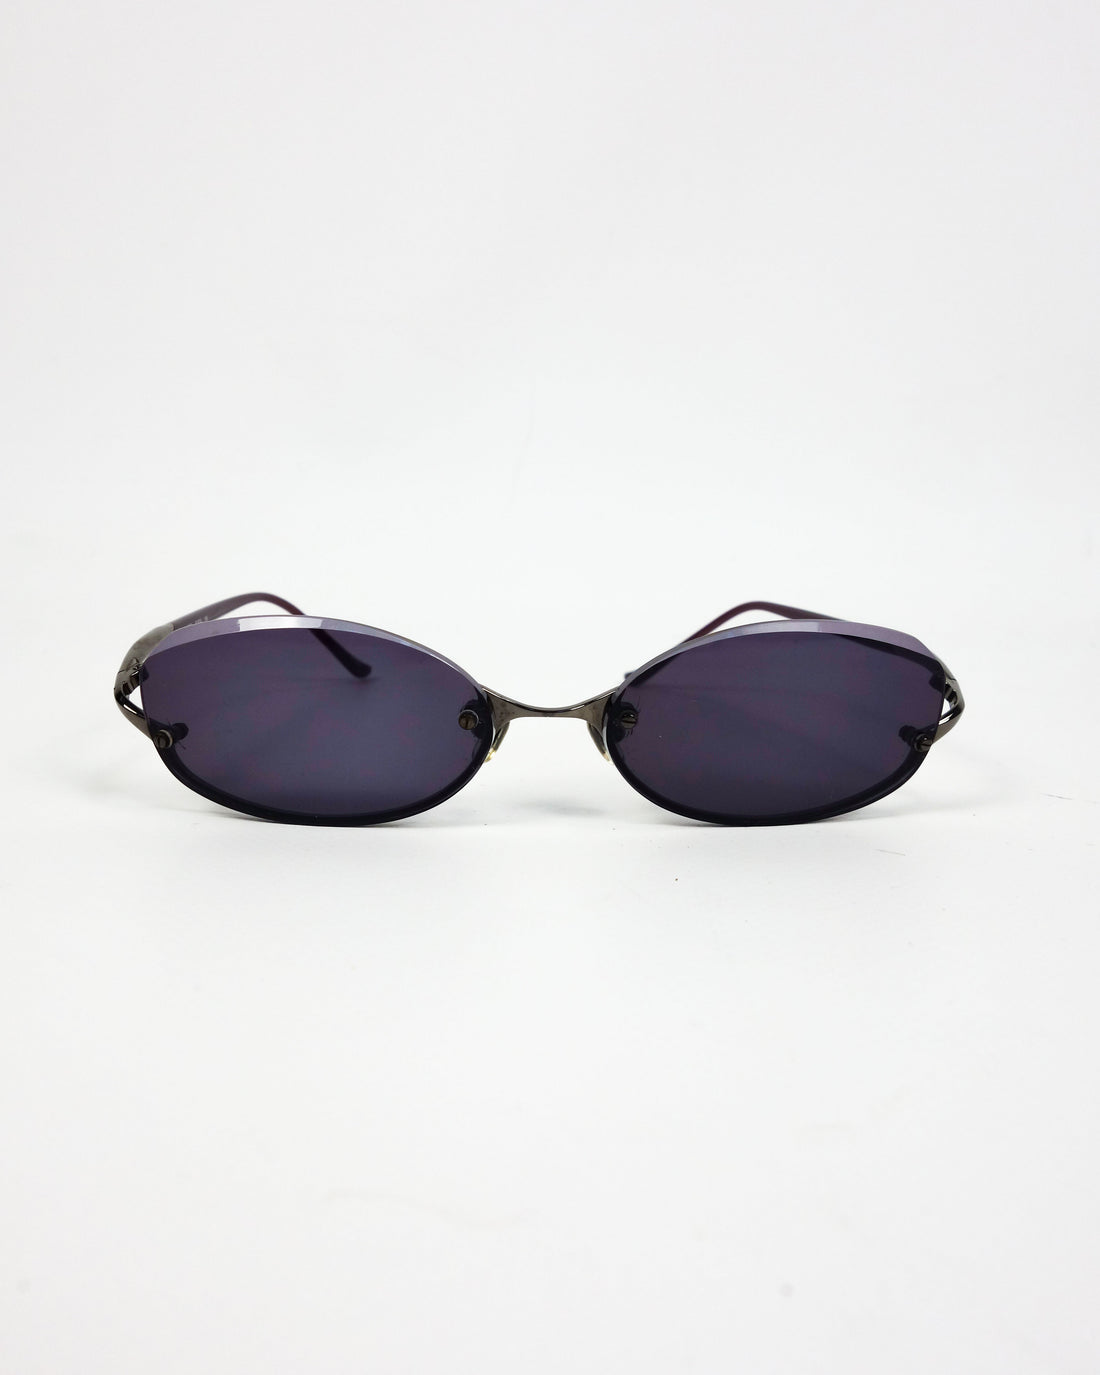 Kata Bardo Metaillic Purple Sunglasses 2000's